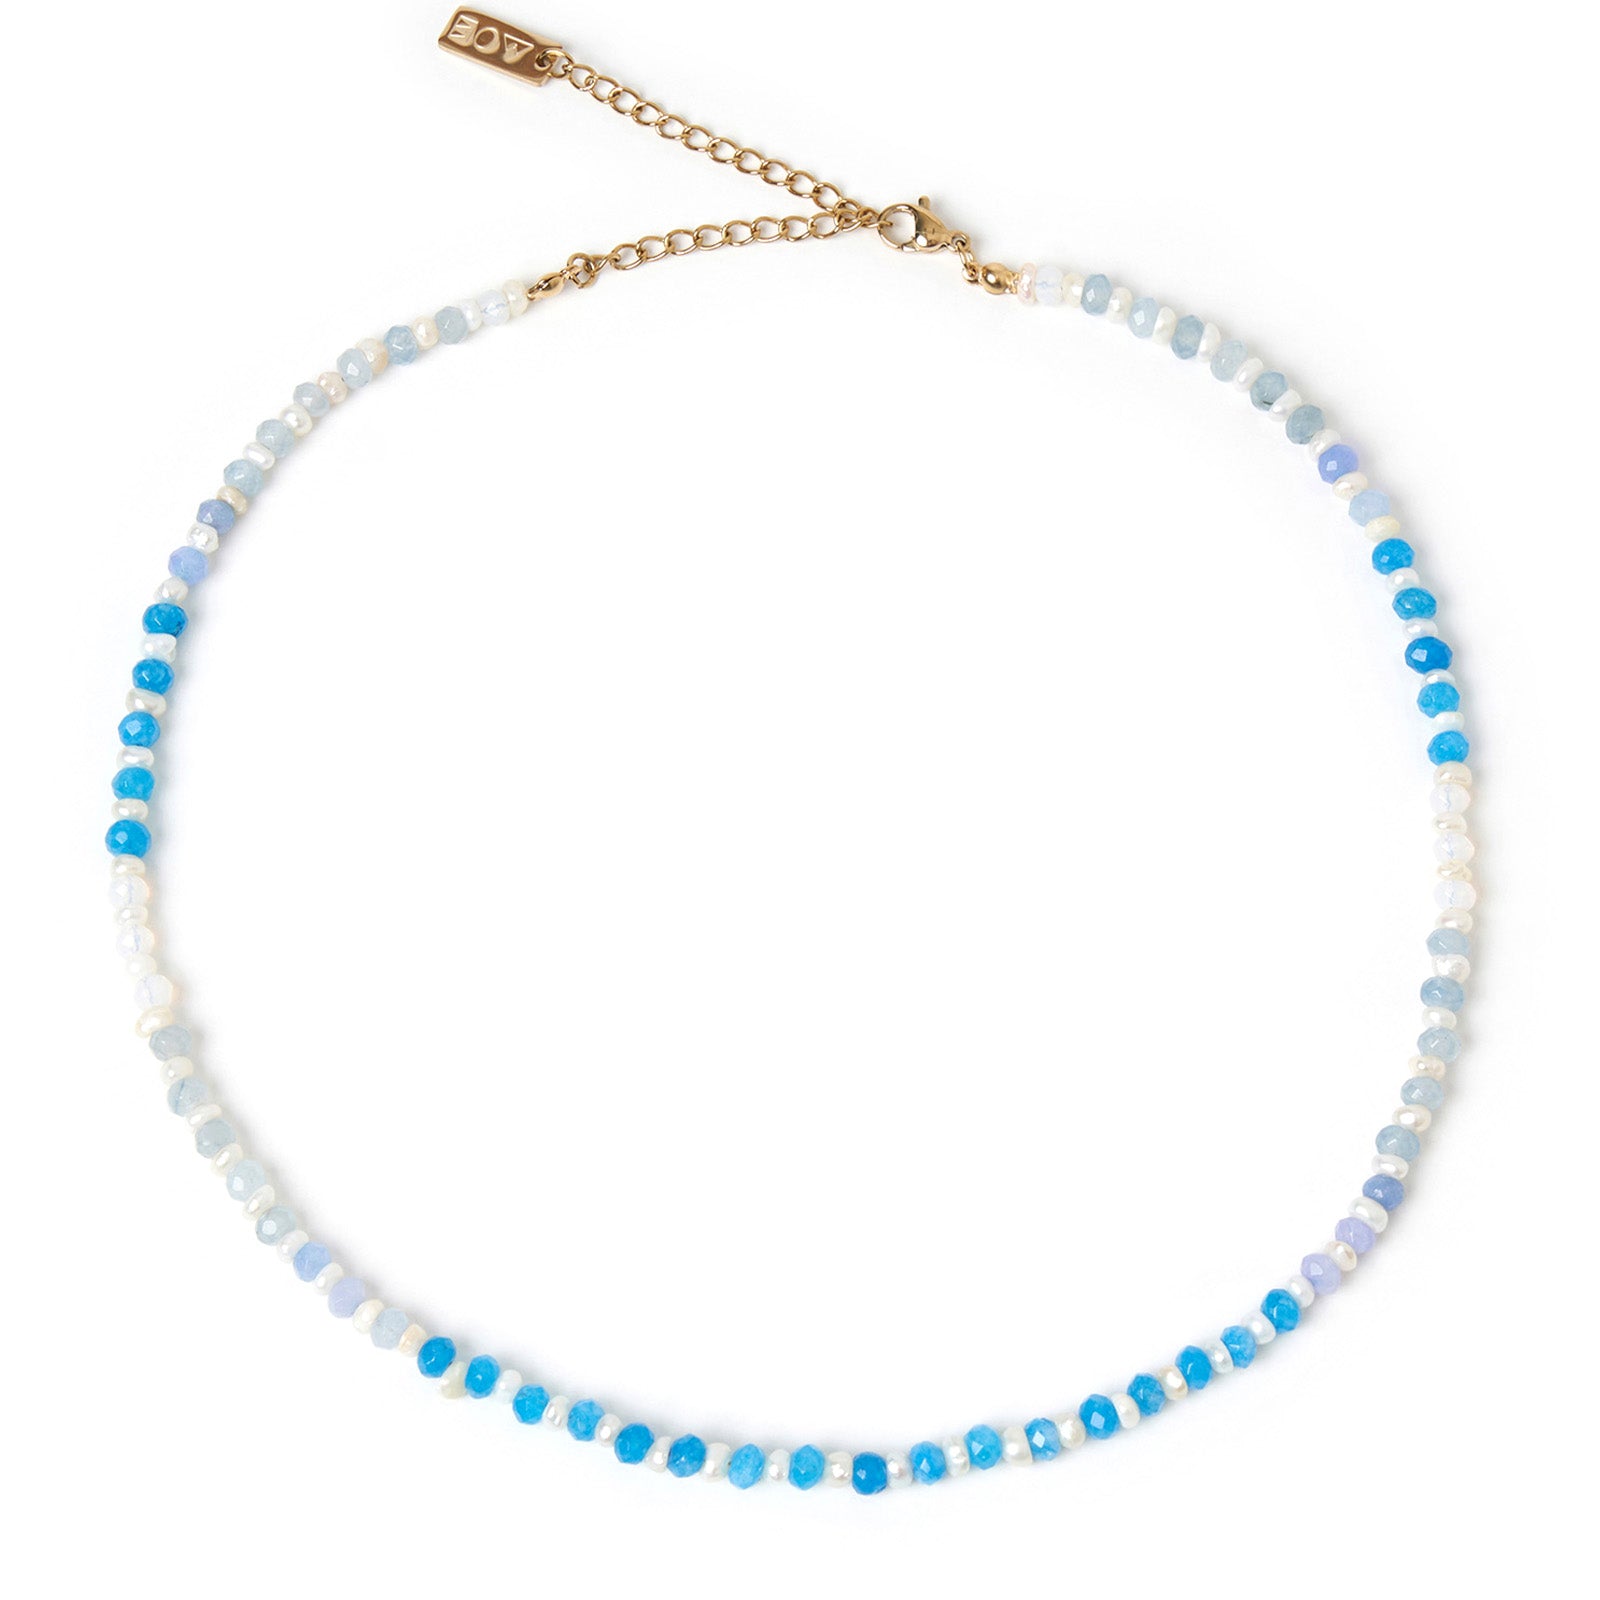 Bloom Pearl and Gemstone Necklace - Ocean